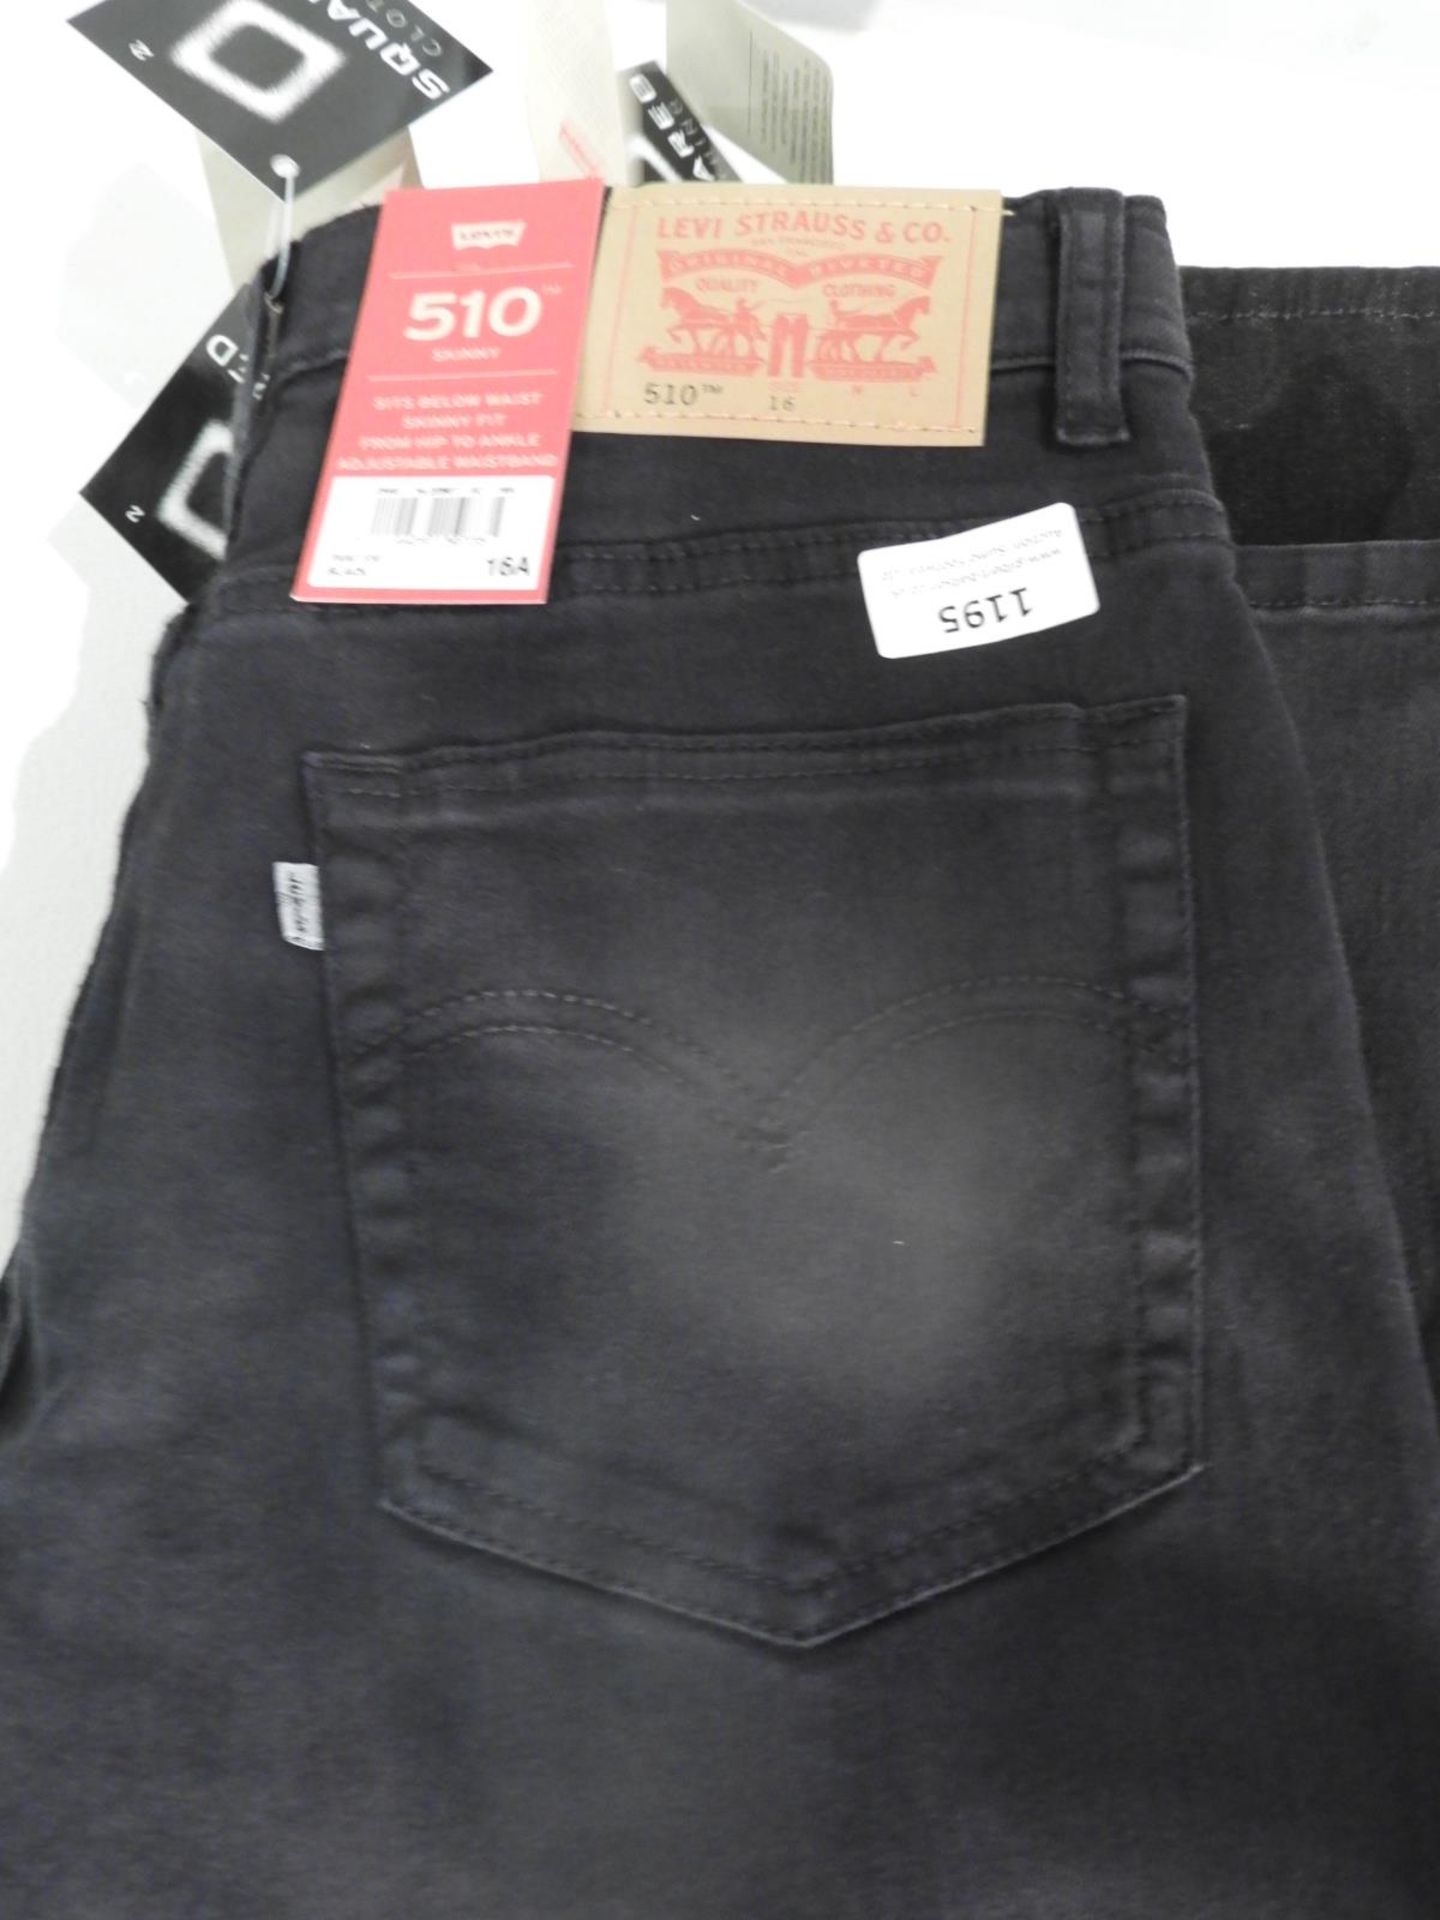 Levi 510 Children's Jeans (Black) Size: 16 Years